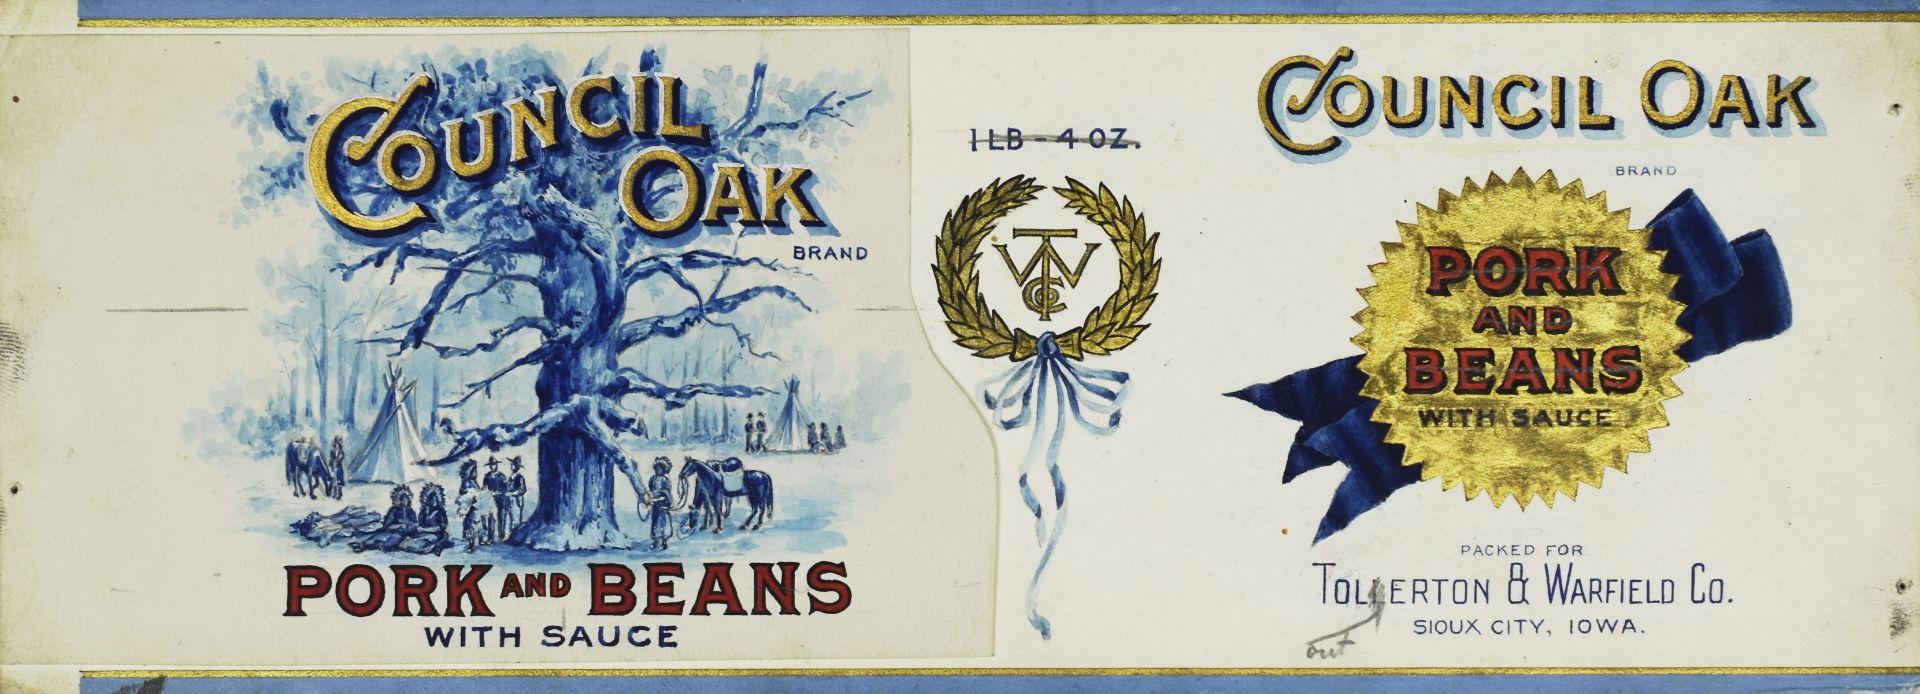 Original Art for Council Oak Pork & Beans Can Label